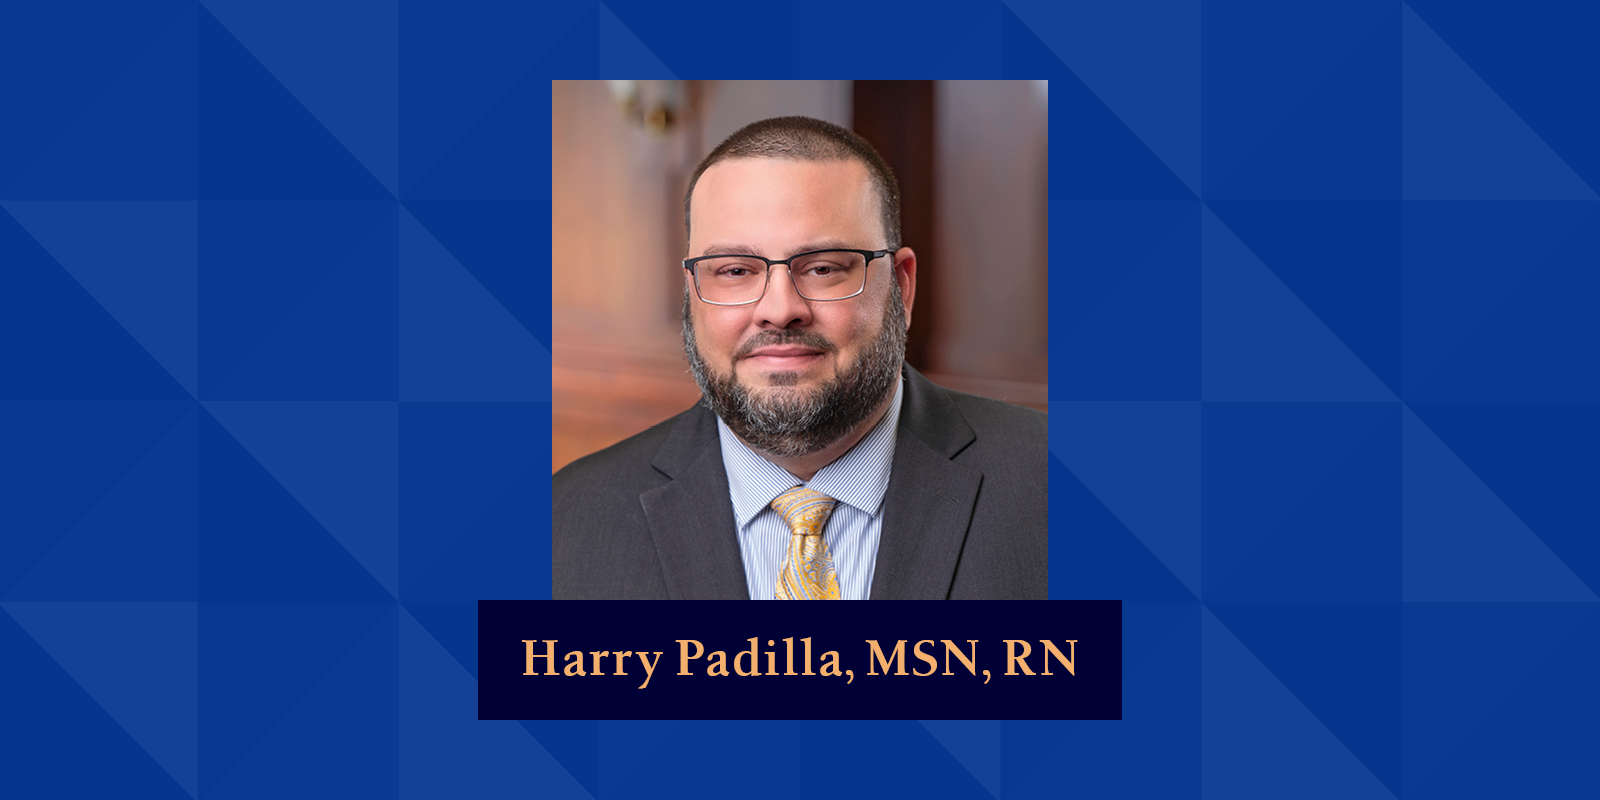 Harry Padilla, MSN, RN